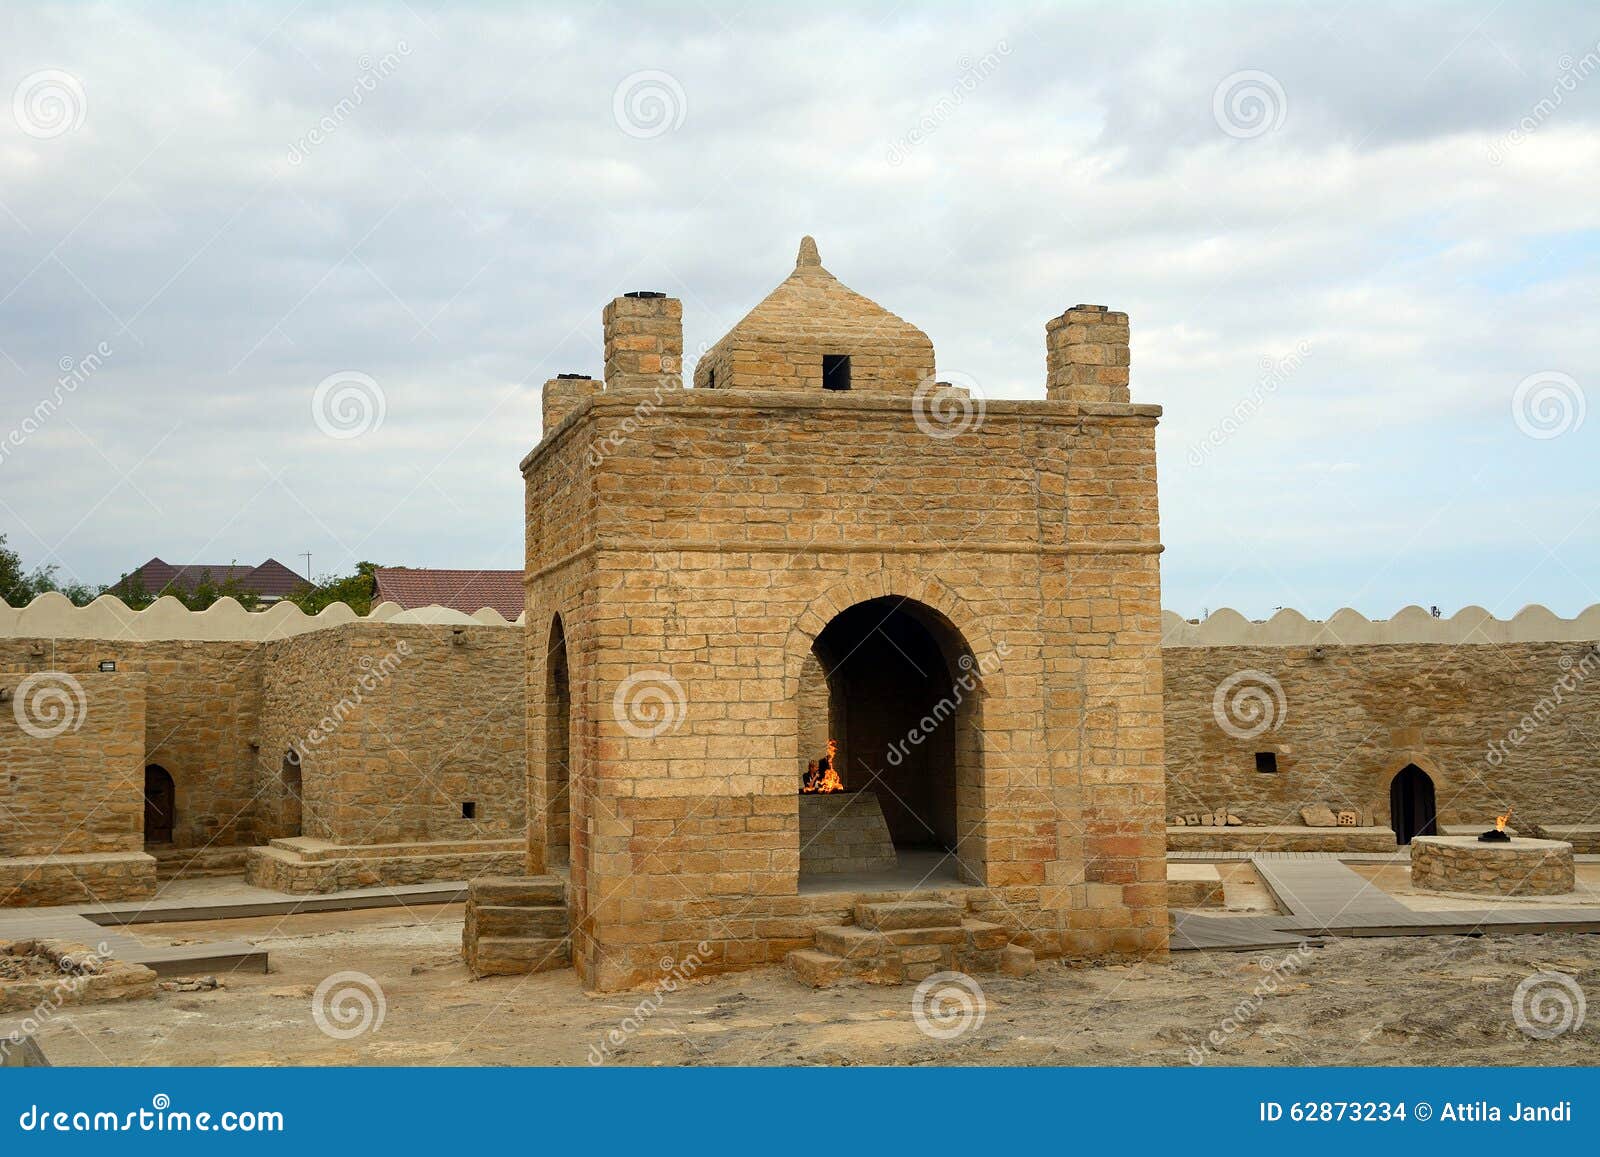 Zoroaster temple in Ateshgah, Azerbaijan.